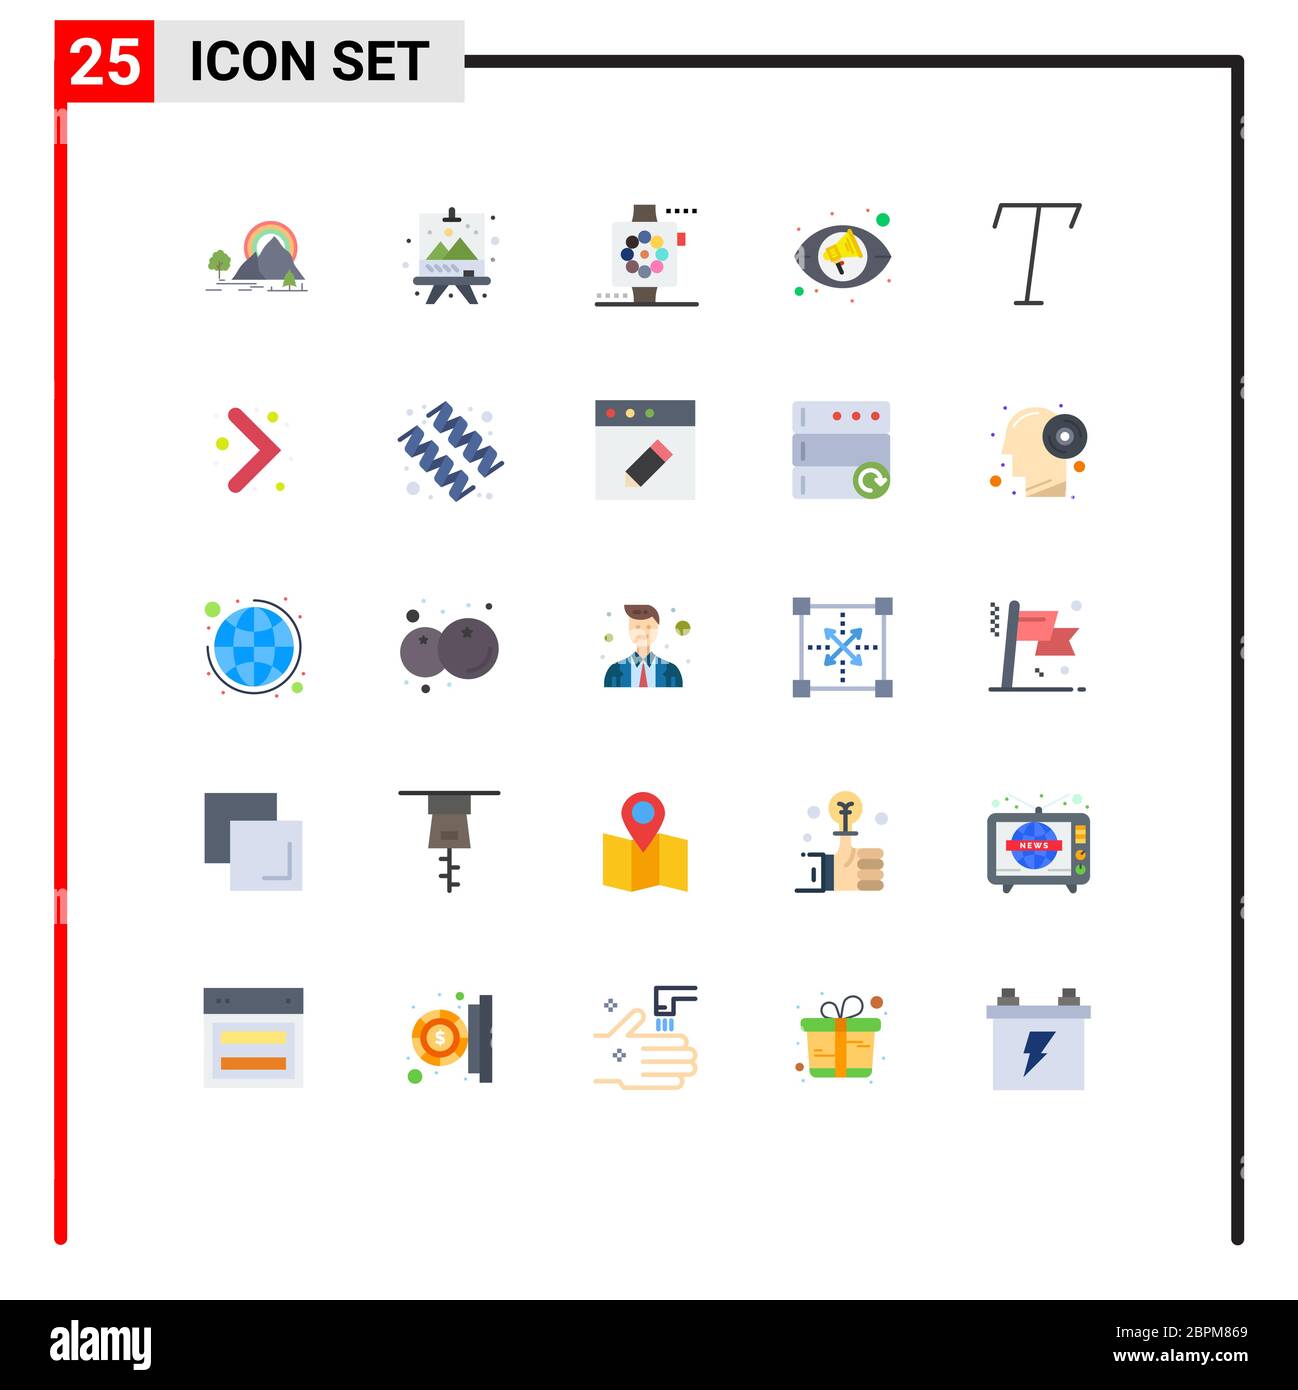 Pack de 25 symboles universels en italique, vues, peinture, marketing, éléments de conception vectoriels modifiables Illustration de Vecteur